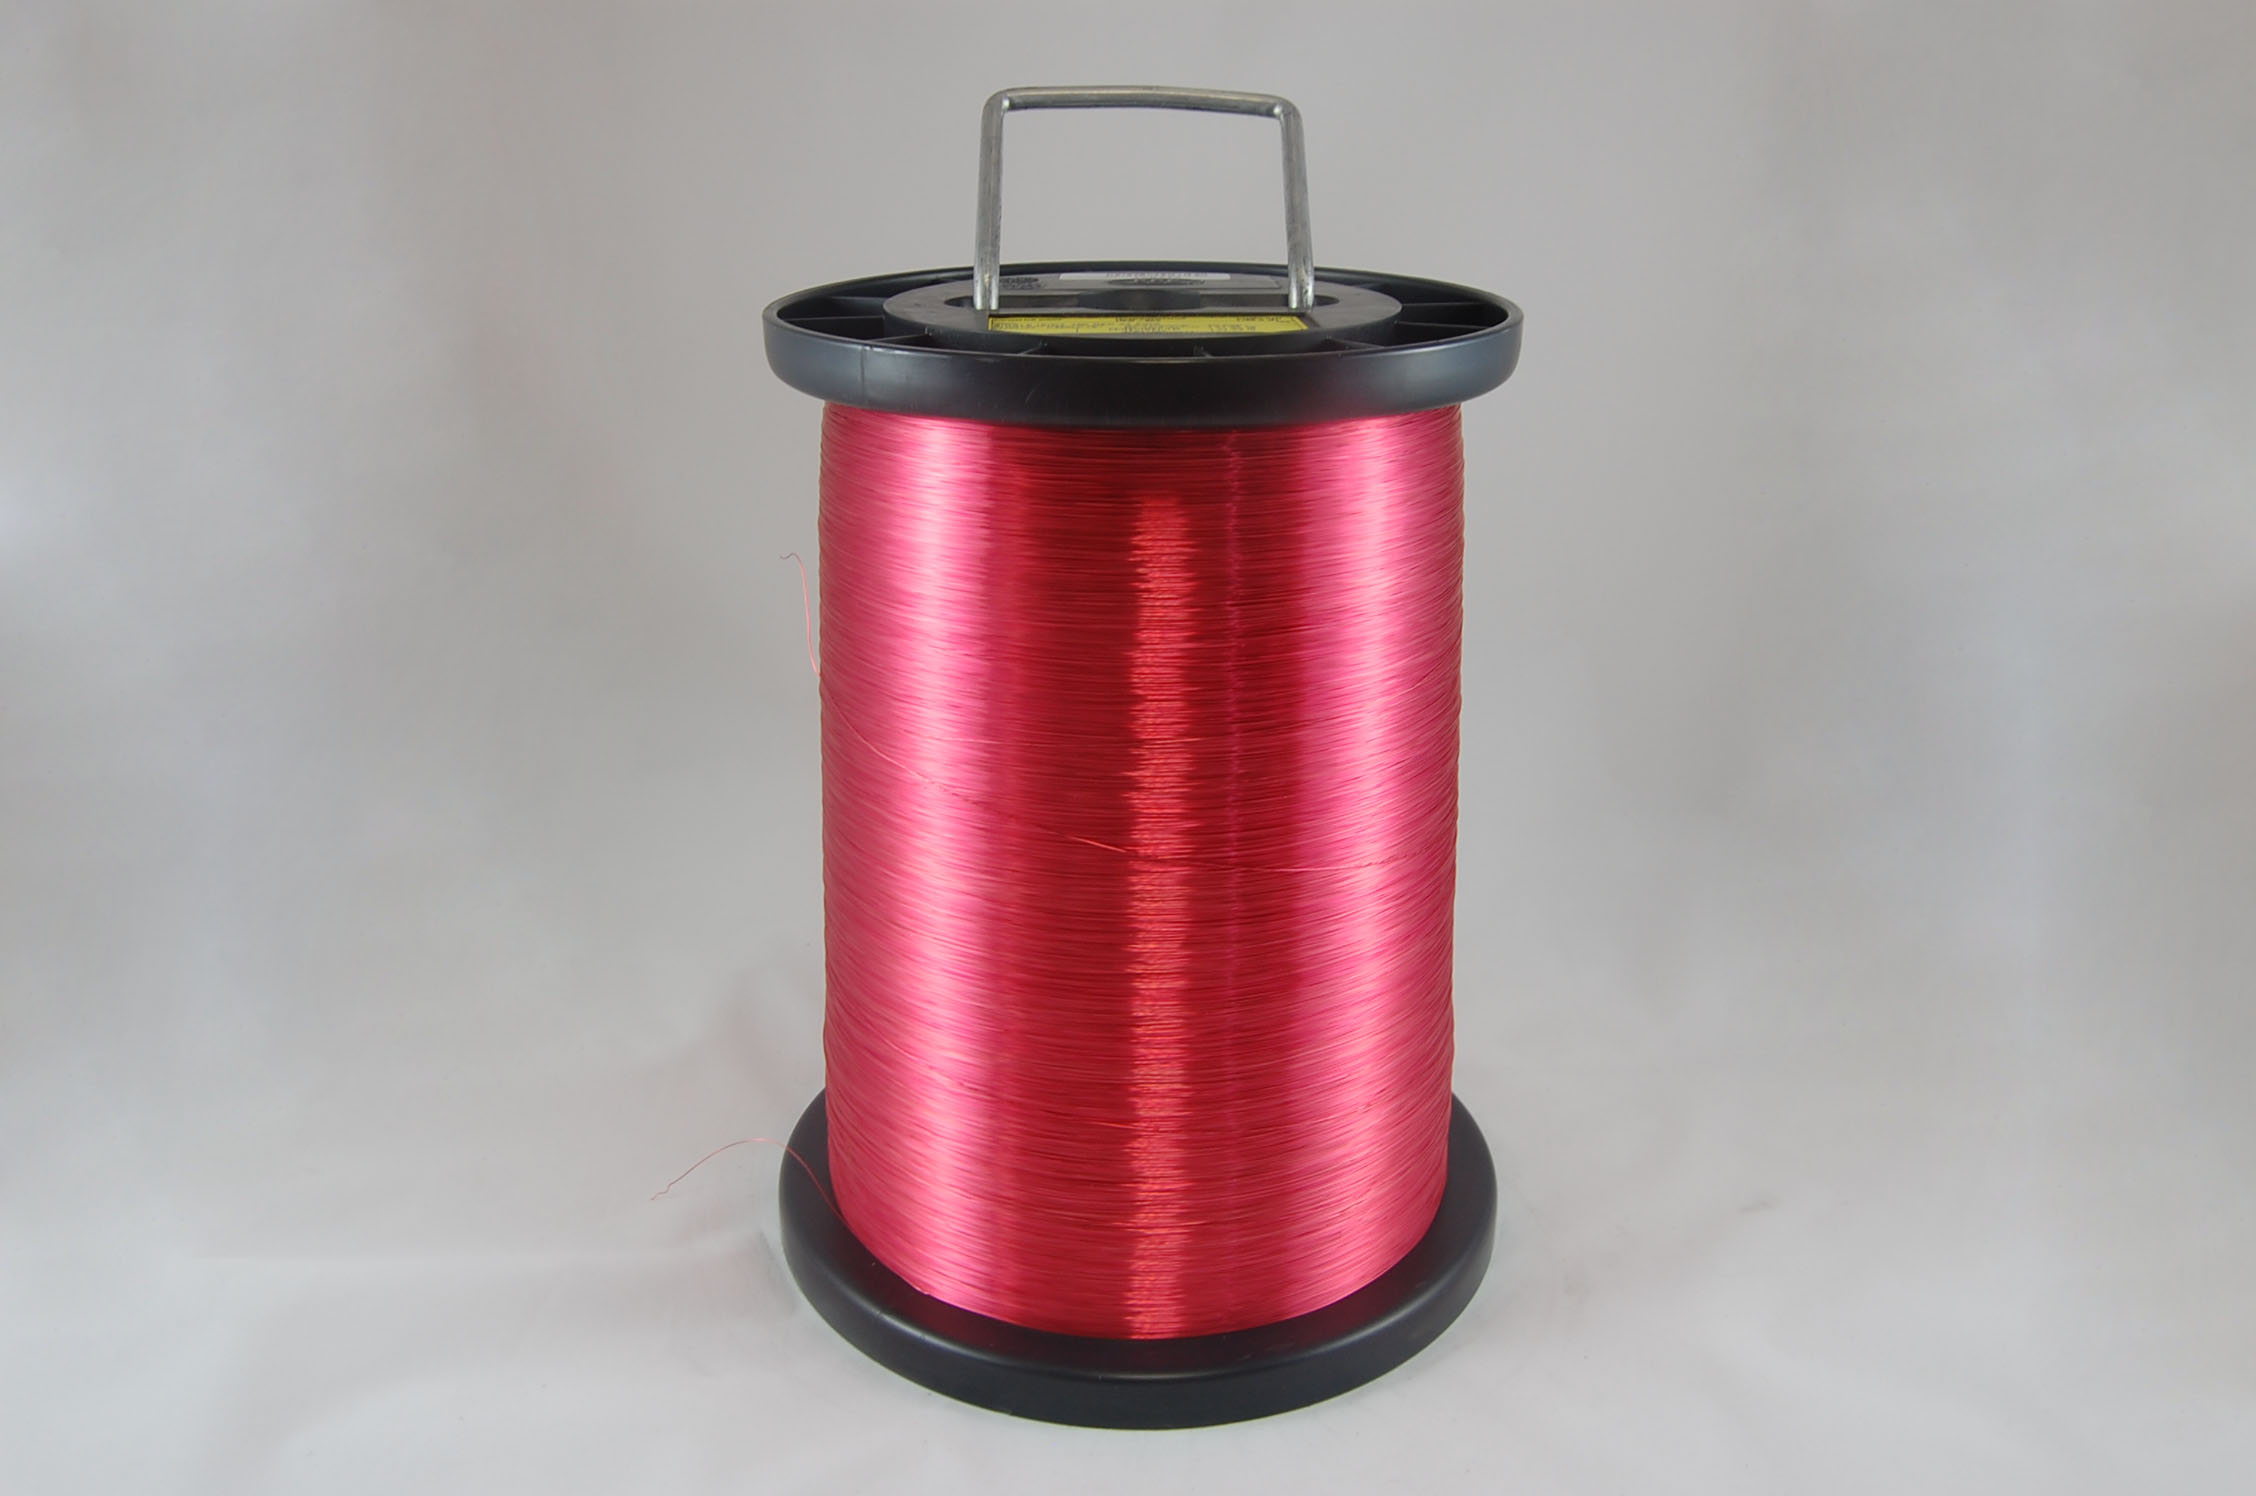 #21.5 Heavy INVEMID 200 Round MW 35 Copper Magnet Wire 200°C, copper, 45 LB half pack pail (average wght.)